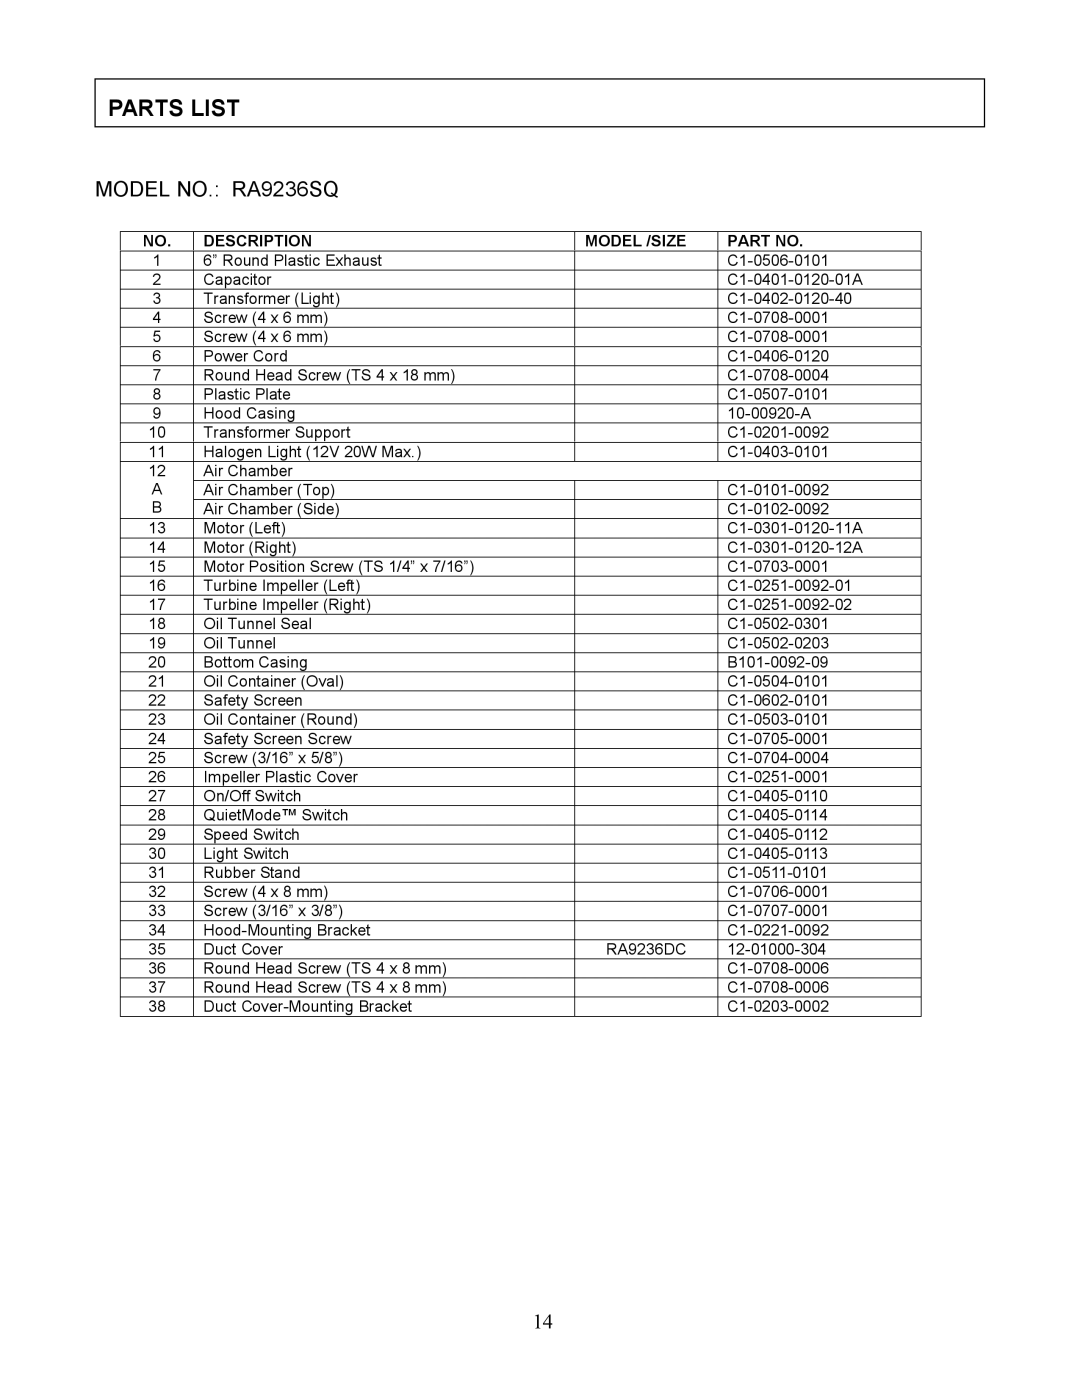 Kobe Range Hoods manual Parts List, Model NO. RA9236SQ 